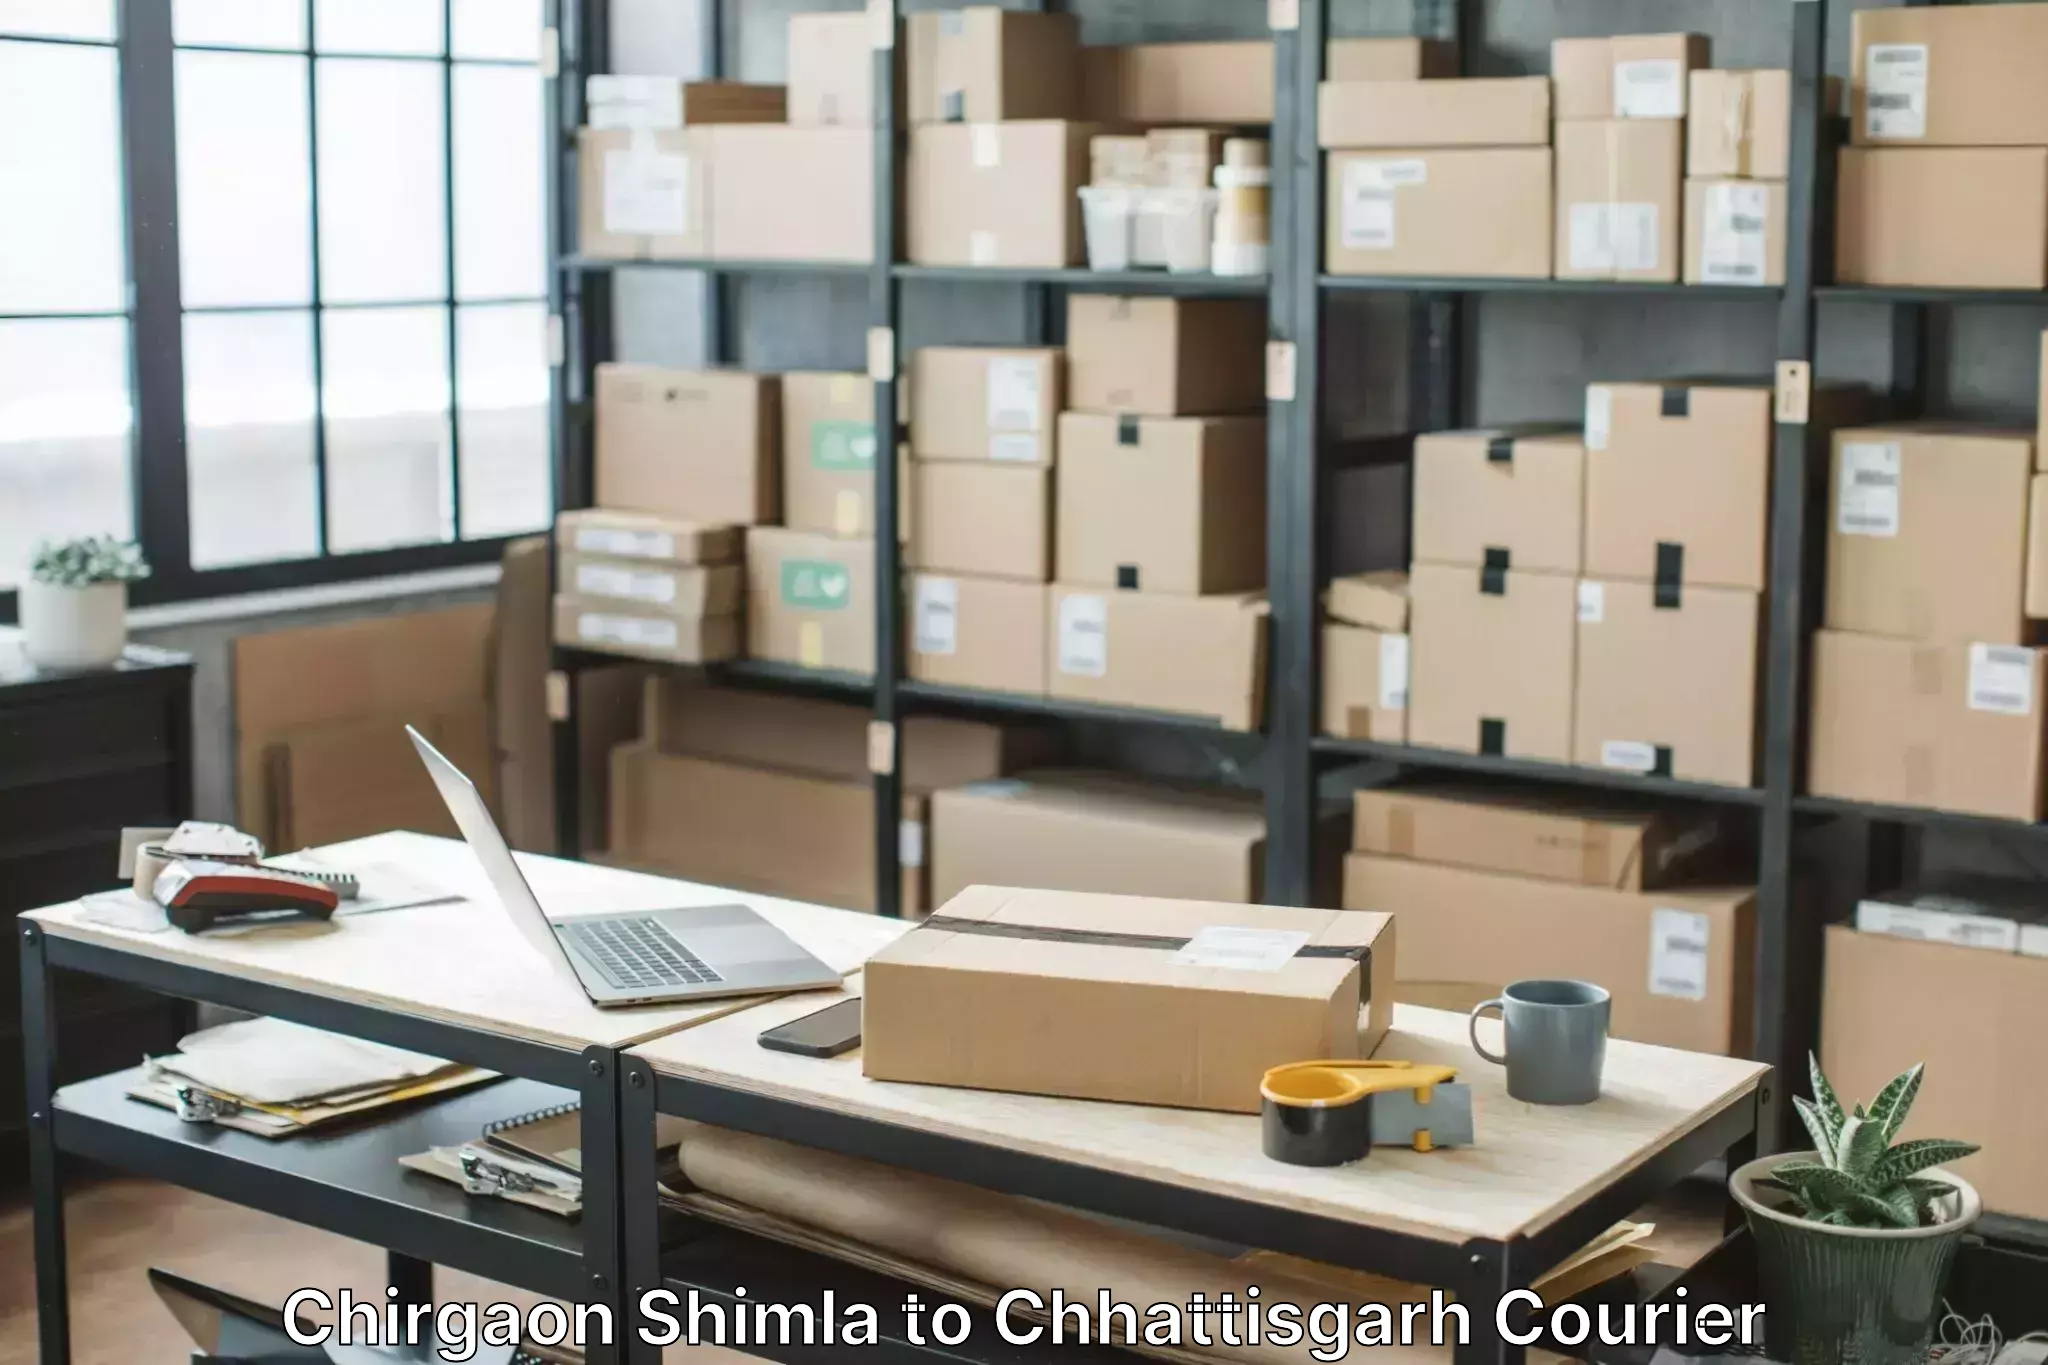 Trusted moving company Chirgaon Shimla to bagbahra